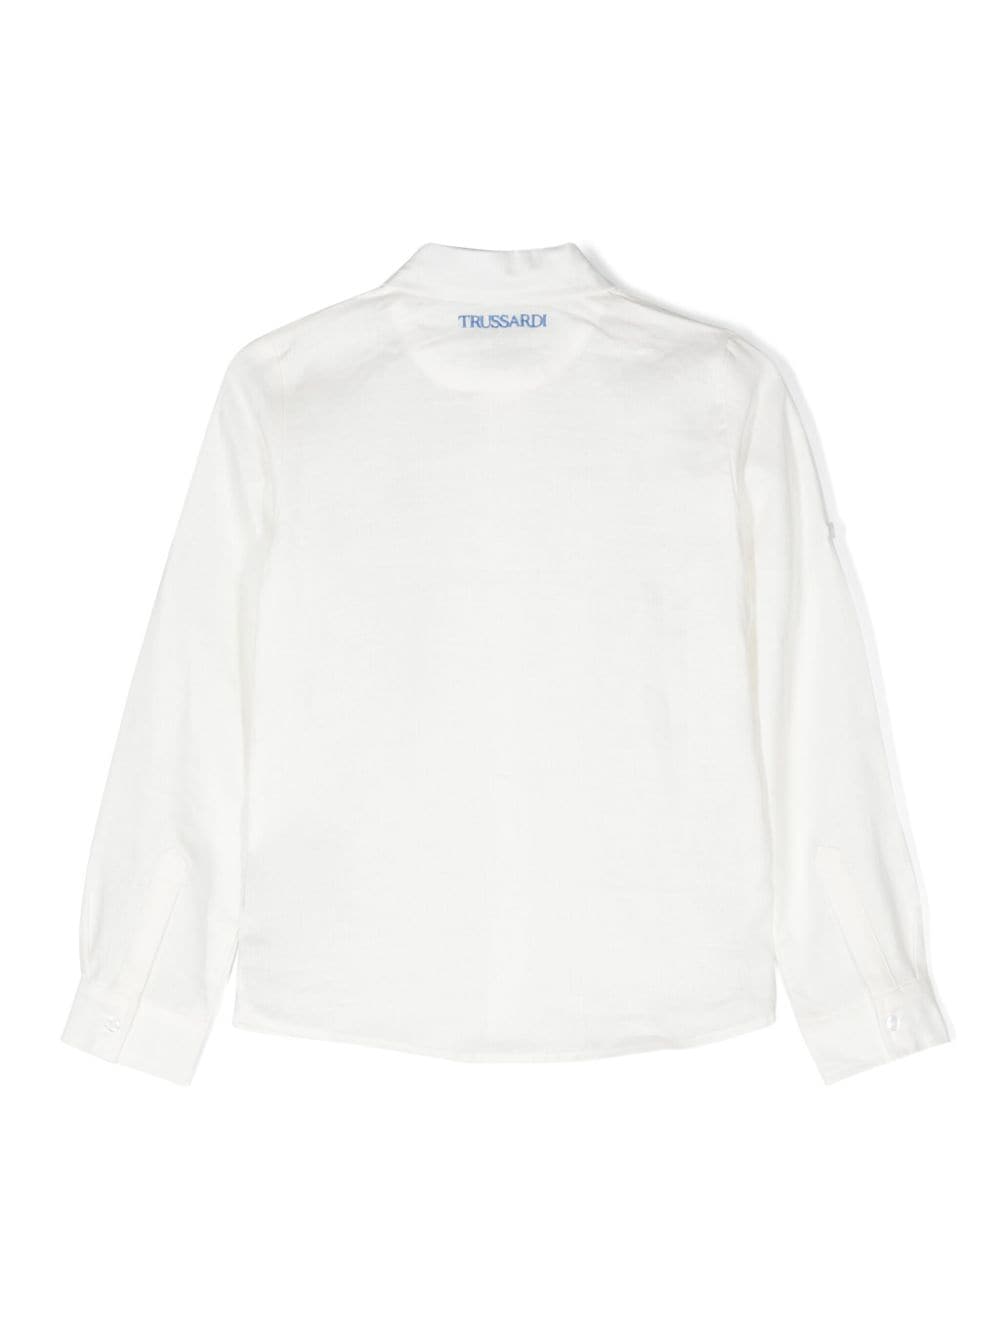 White linen shirt for boys with logo